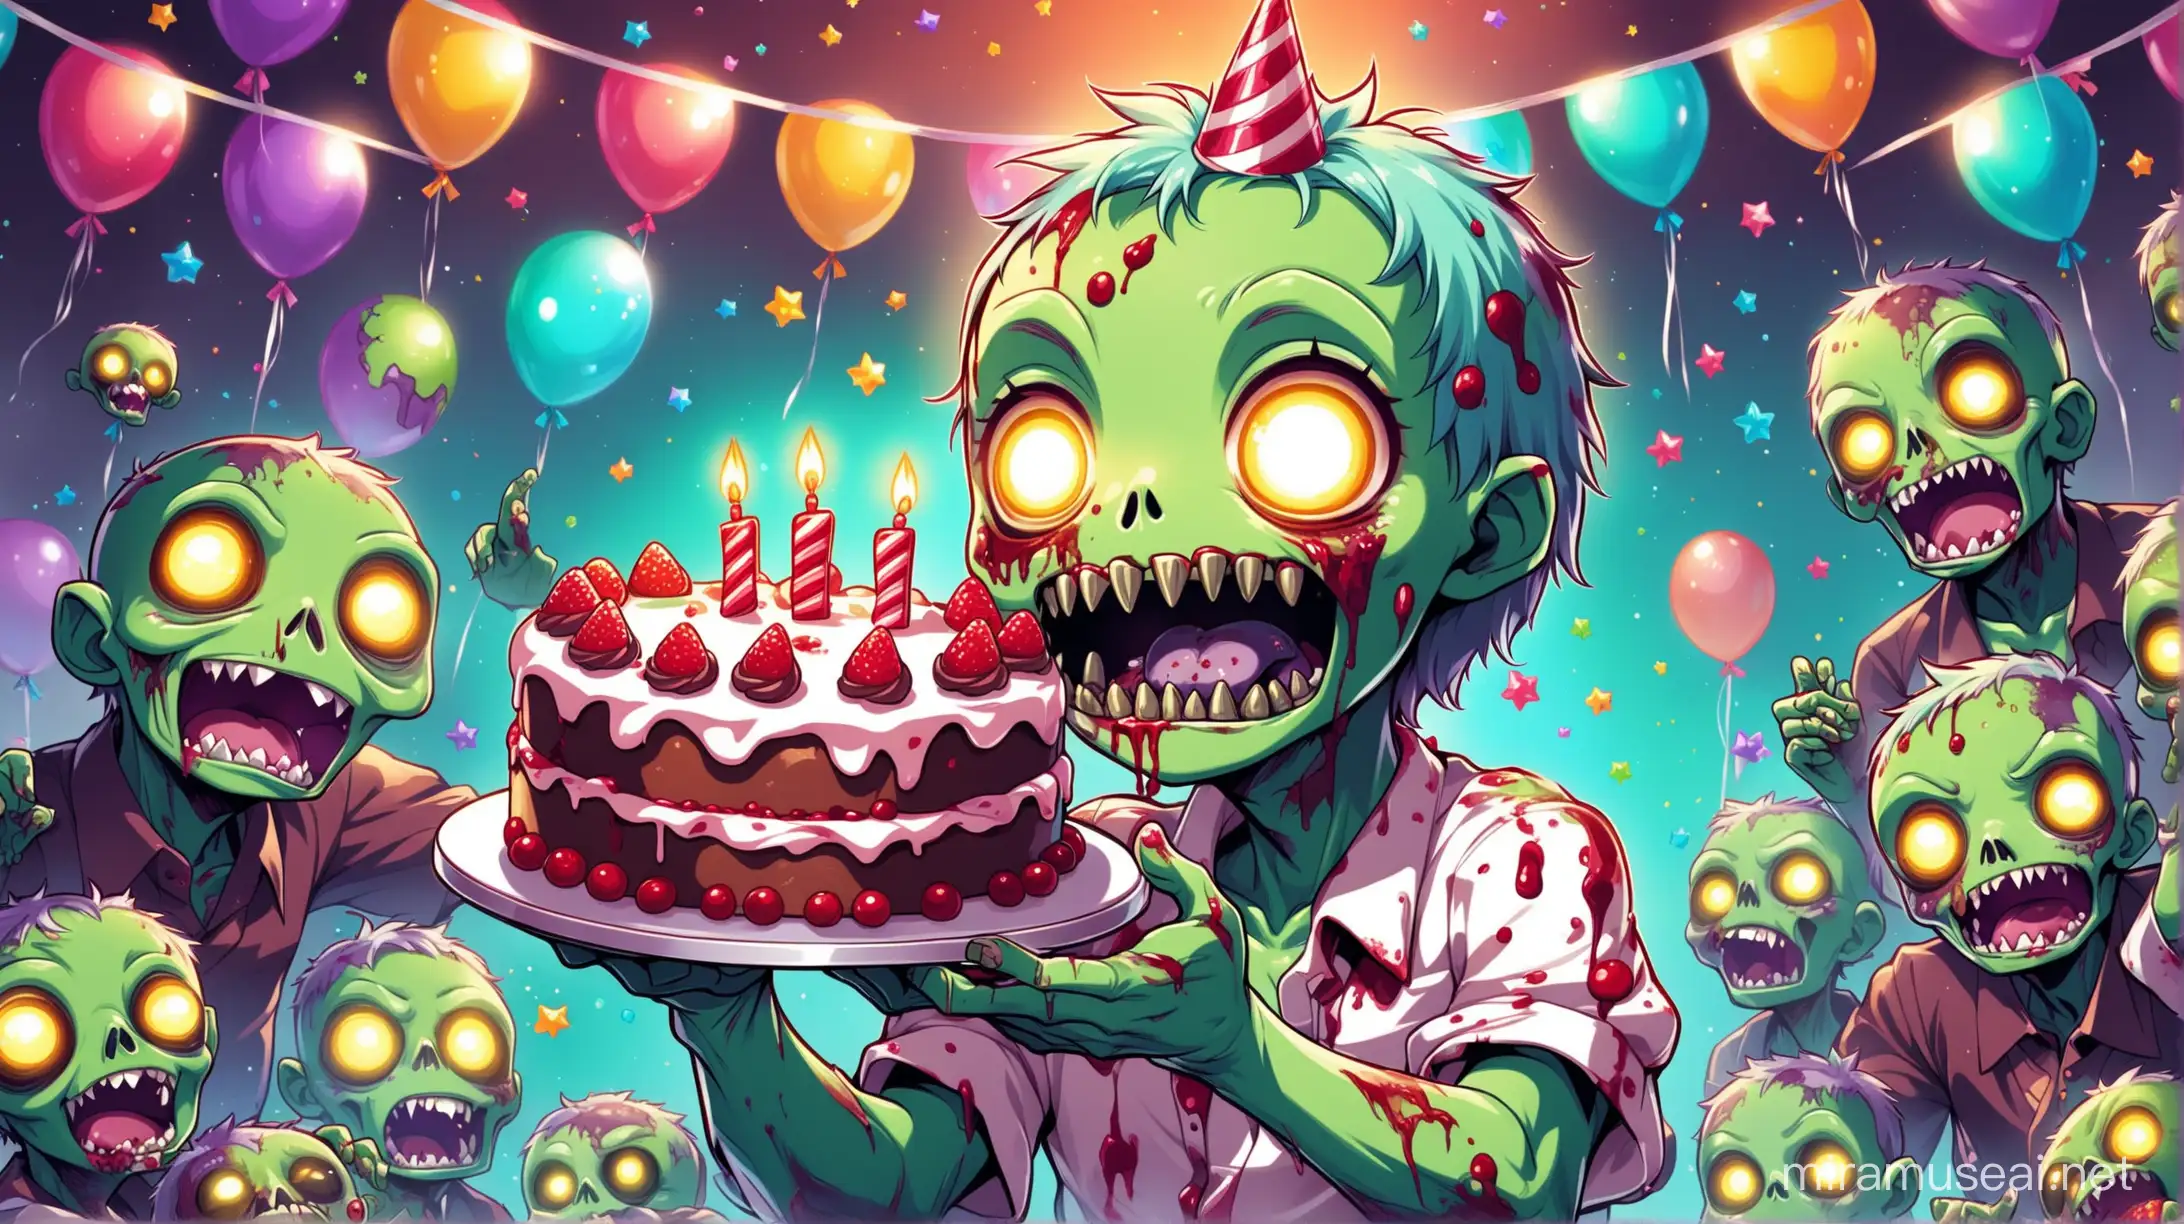 Cheerful Zombie Celebrating Birthday with Cake